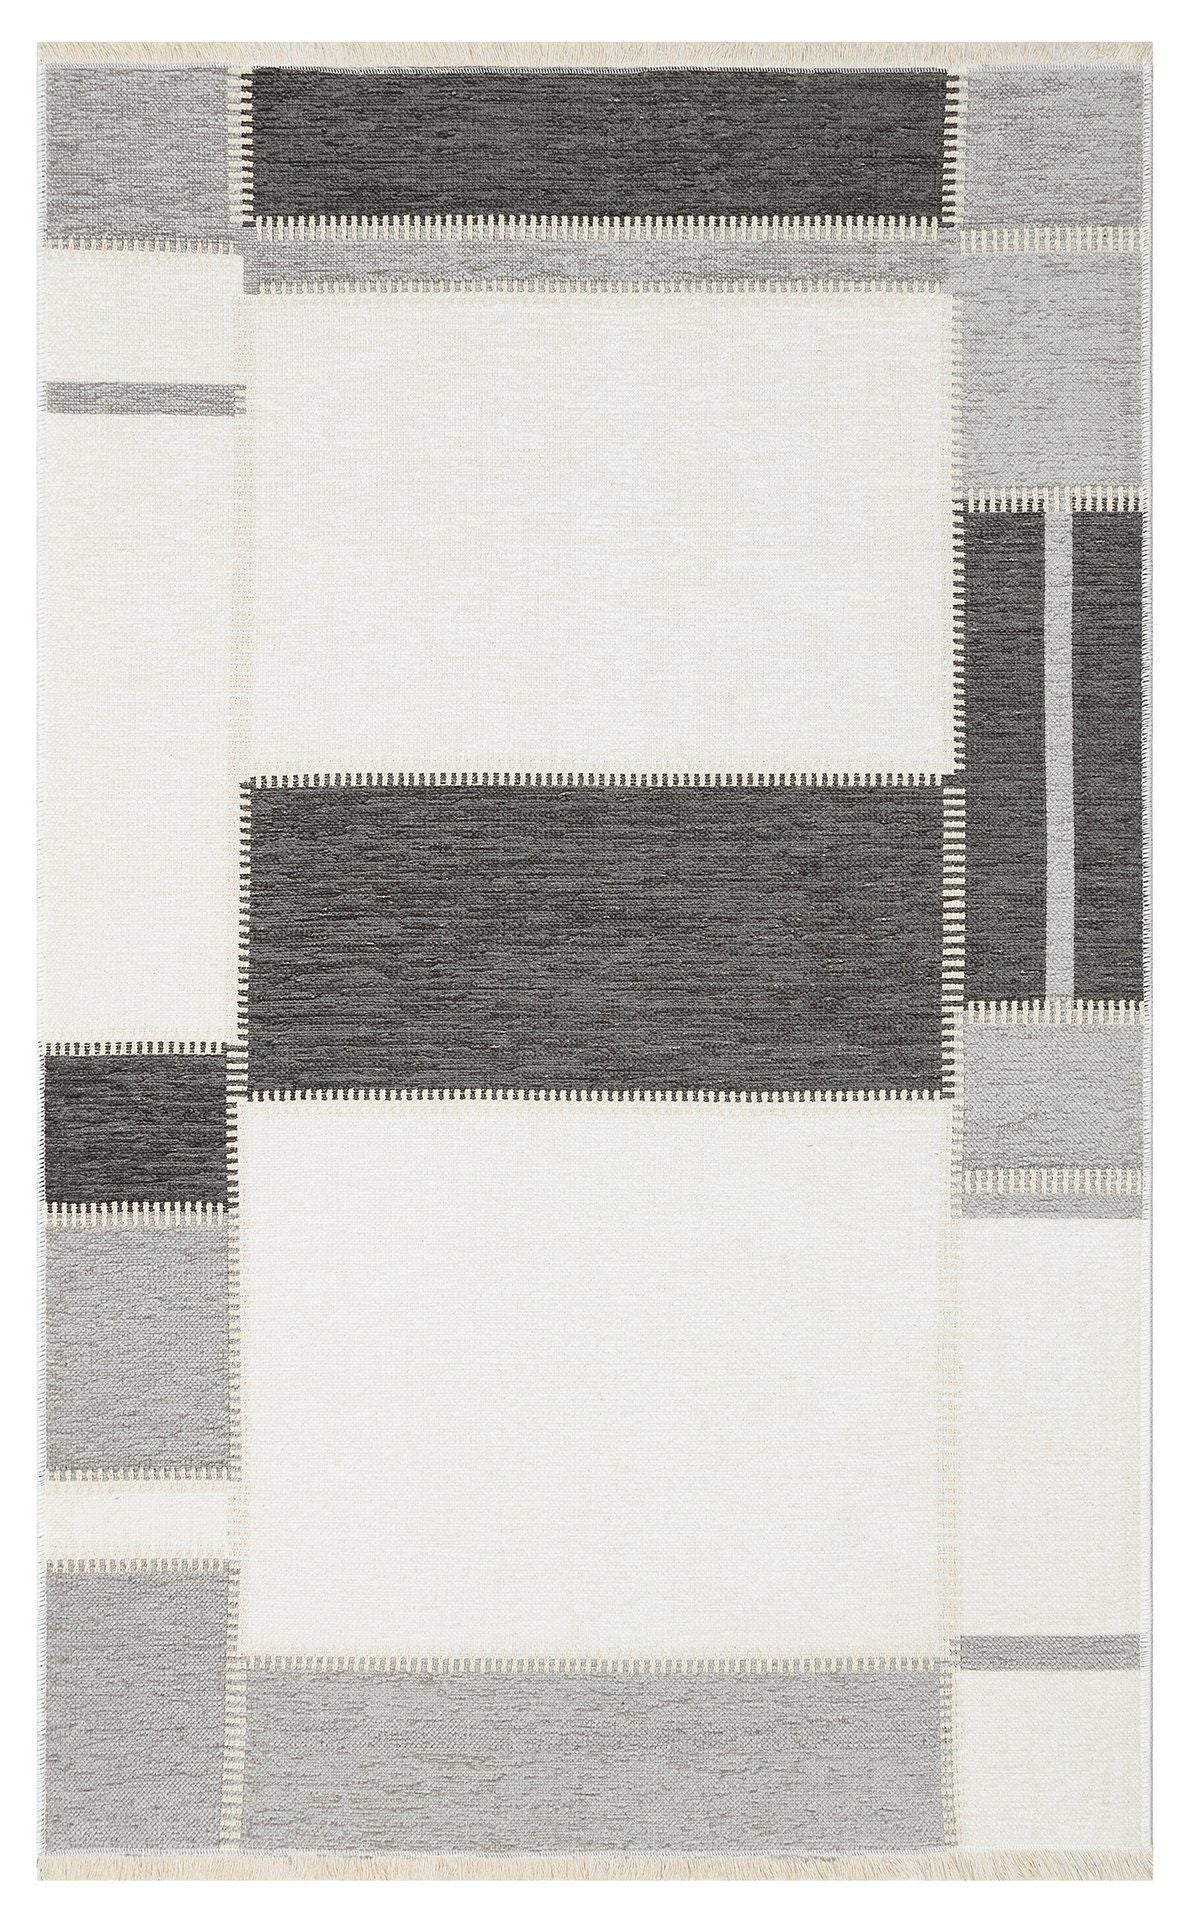 Nk 08 - Grå, antracit - Hall tæppe (75 x 200)